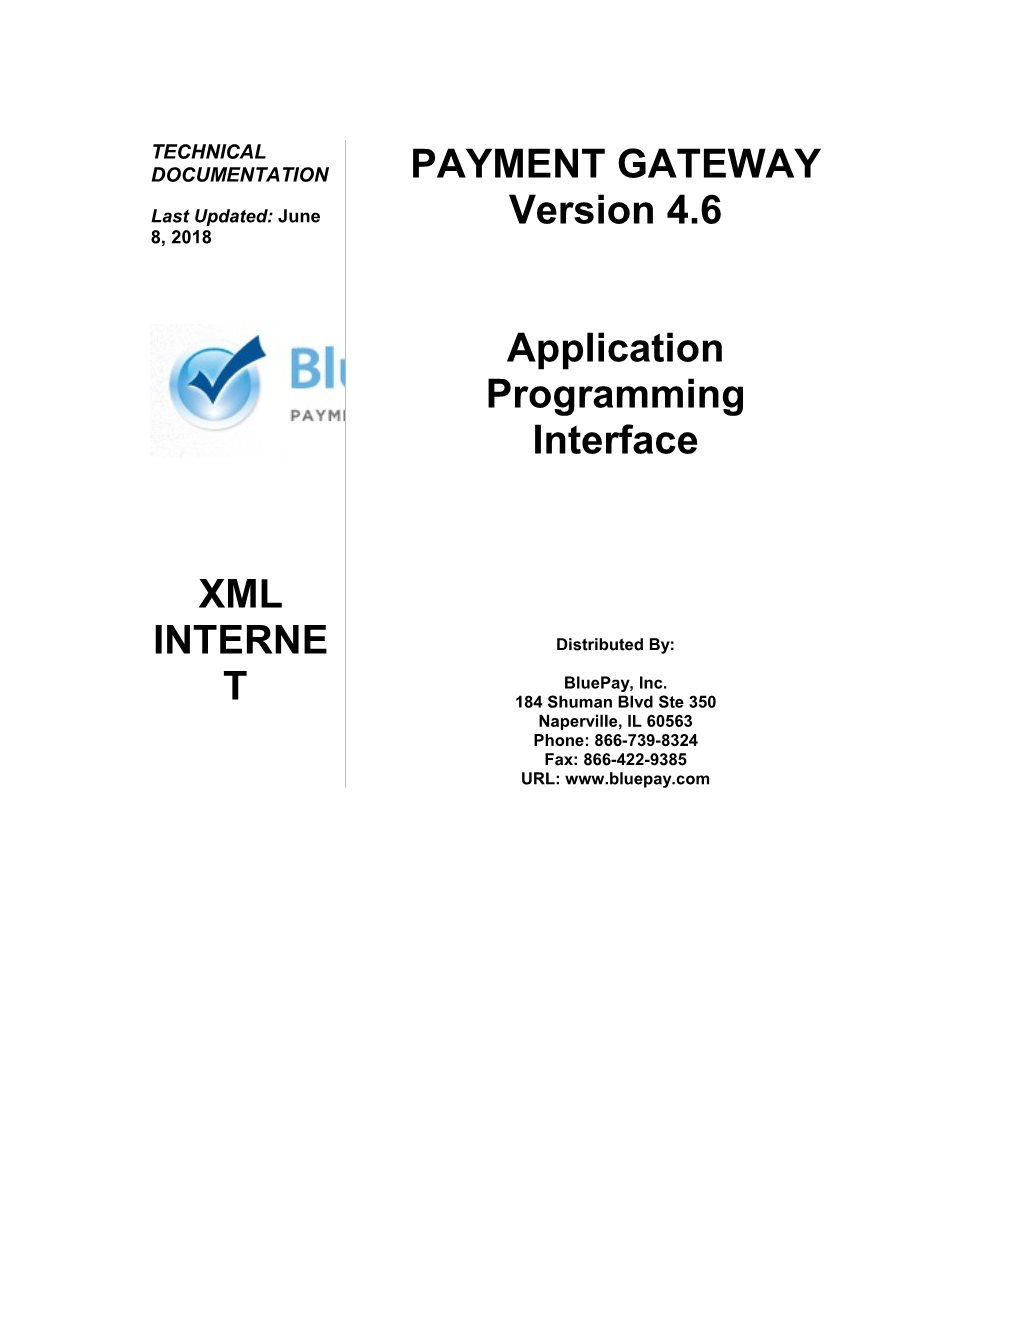 Bluepay XML Internet Payment Gateway